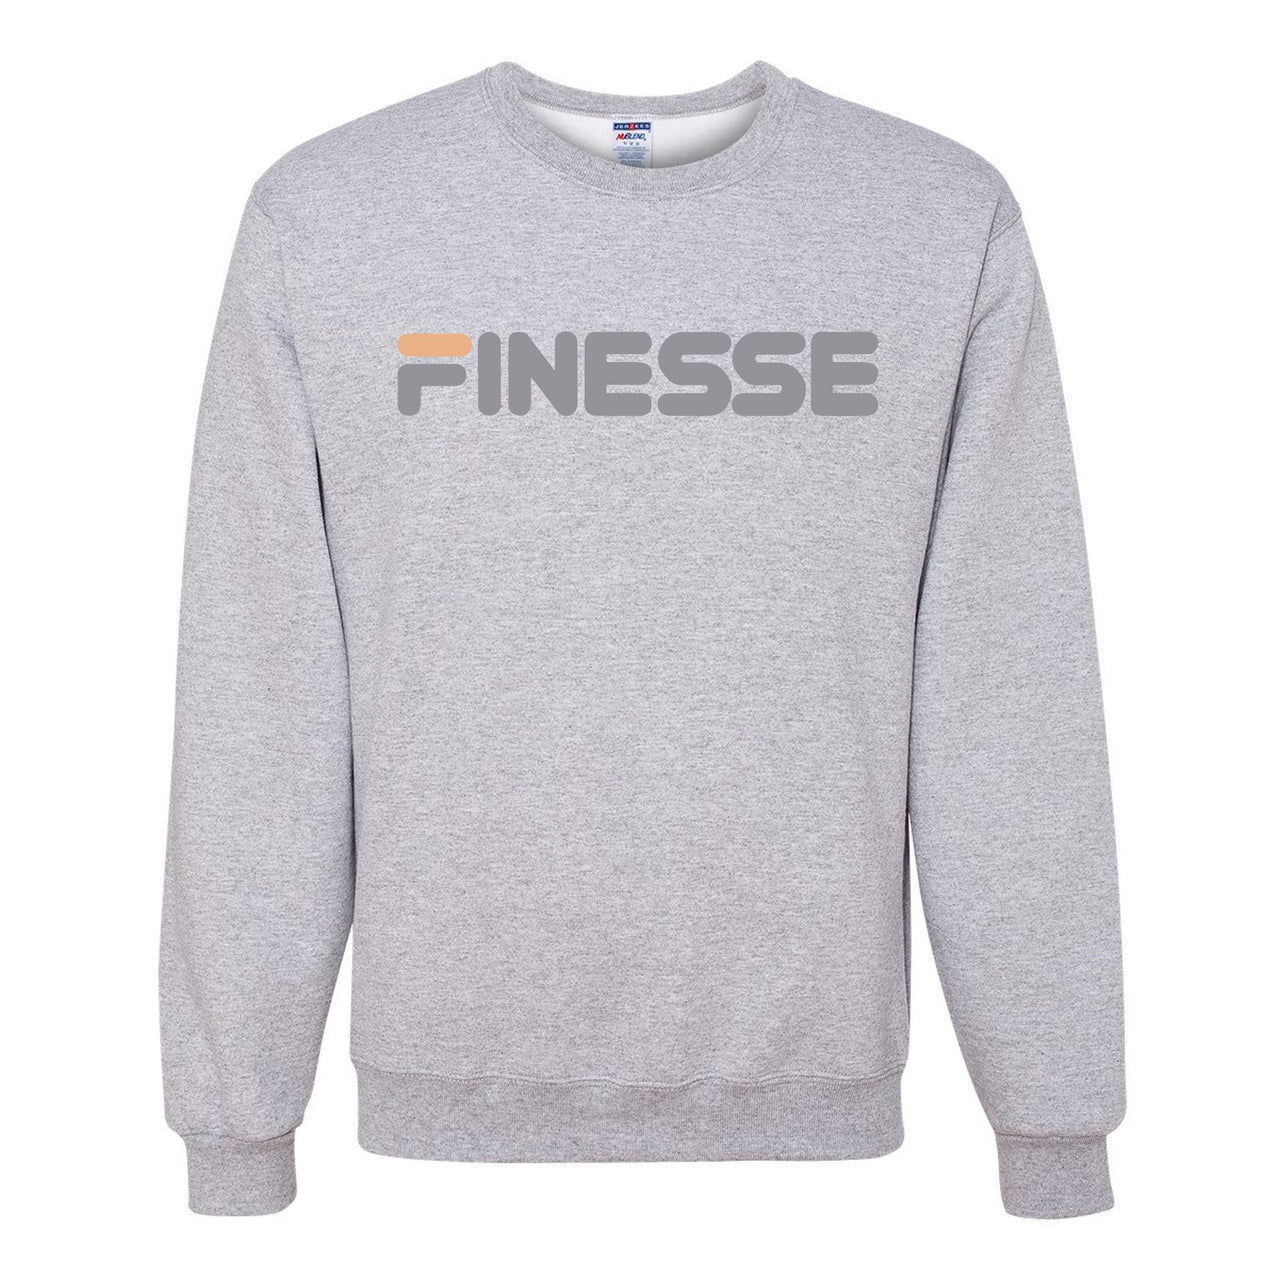 True Form v2 350s Crewneck Sweater | Finesse, Heathered Light Gray